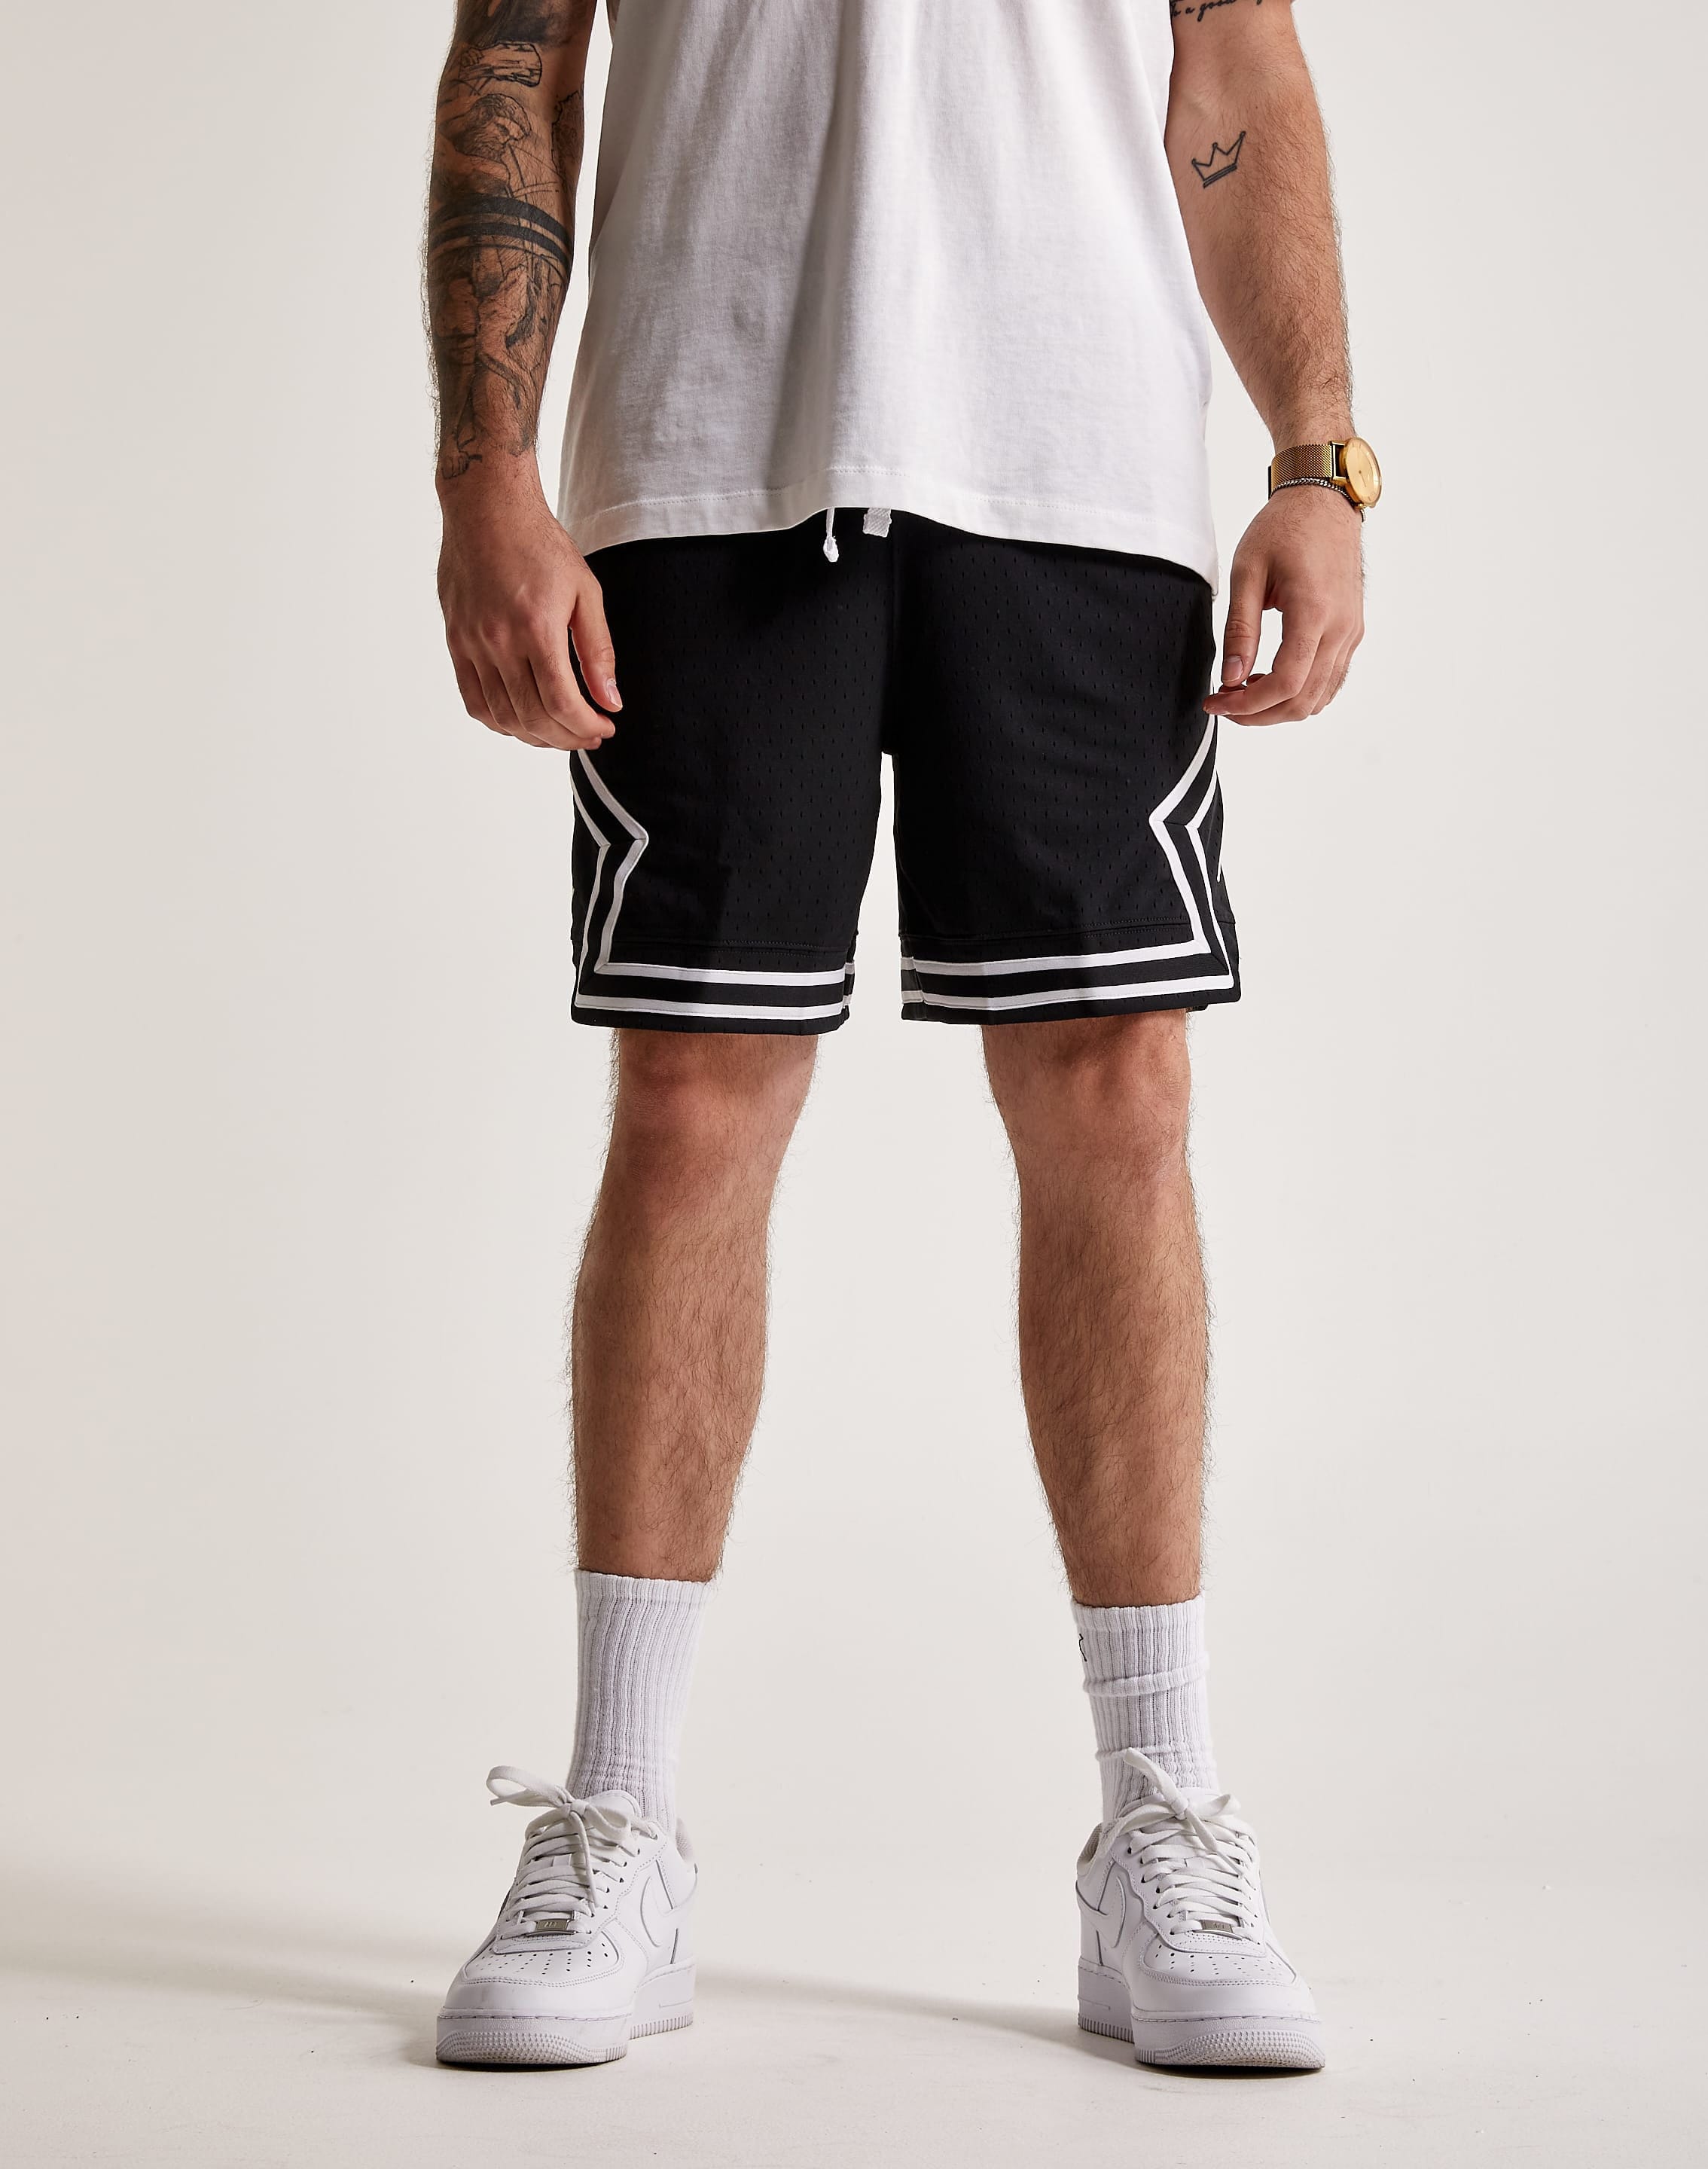 Jordan Men's Dri-Fit Sport Diamond Shorts, Medium, Black